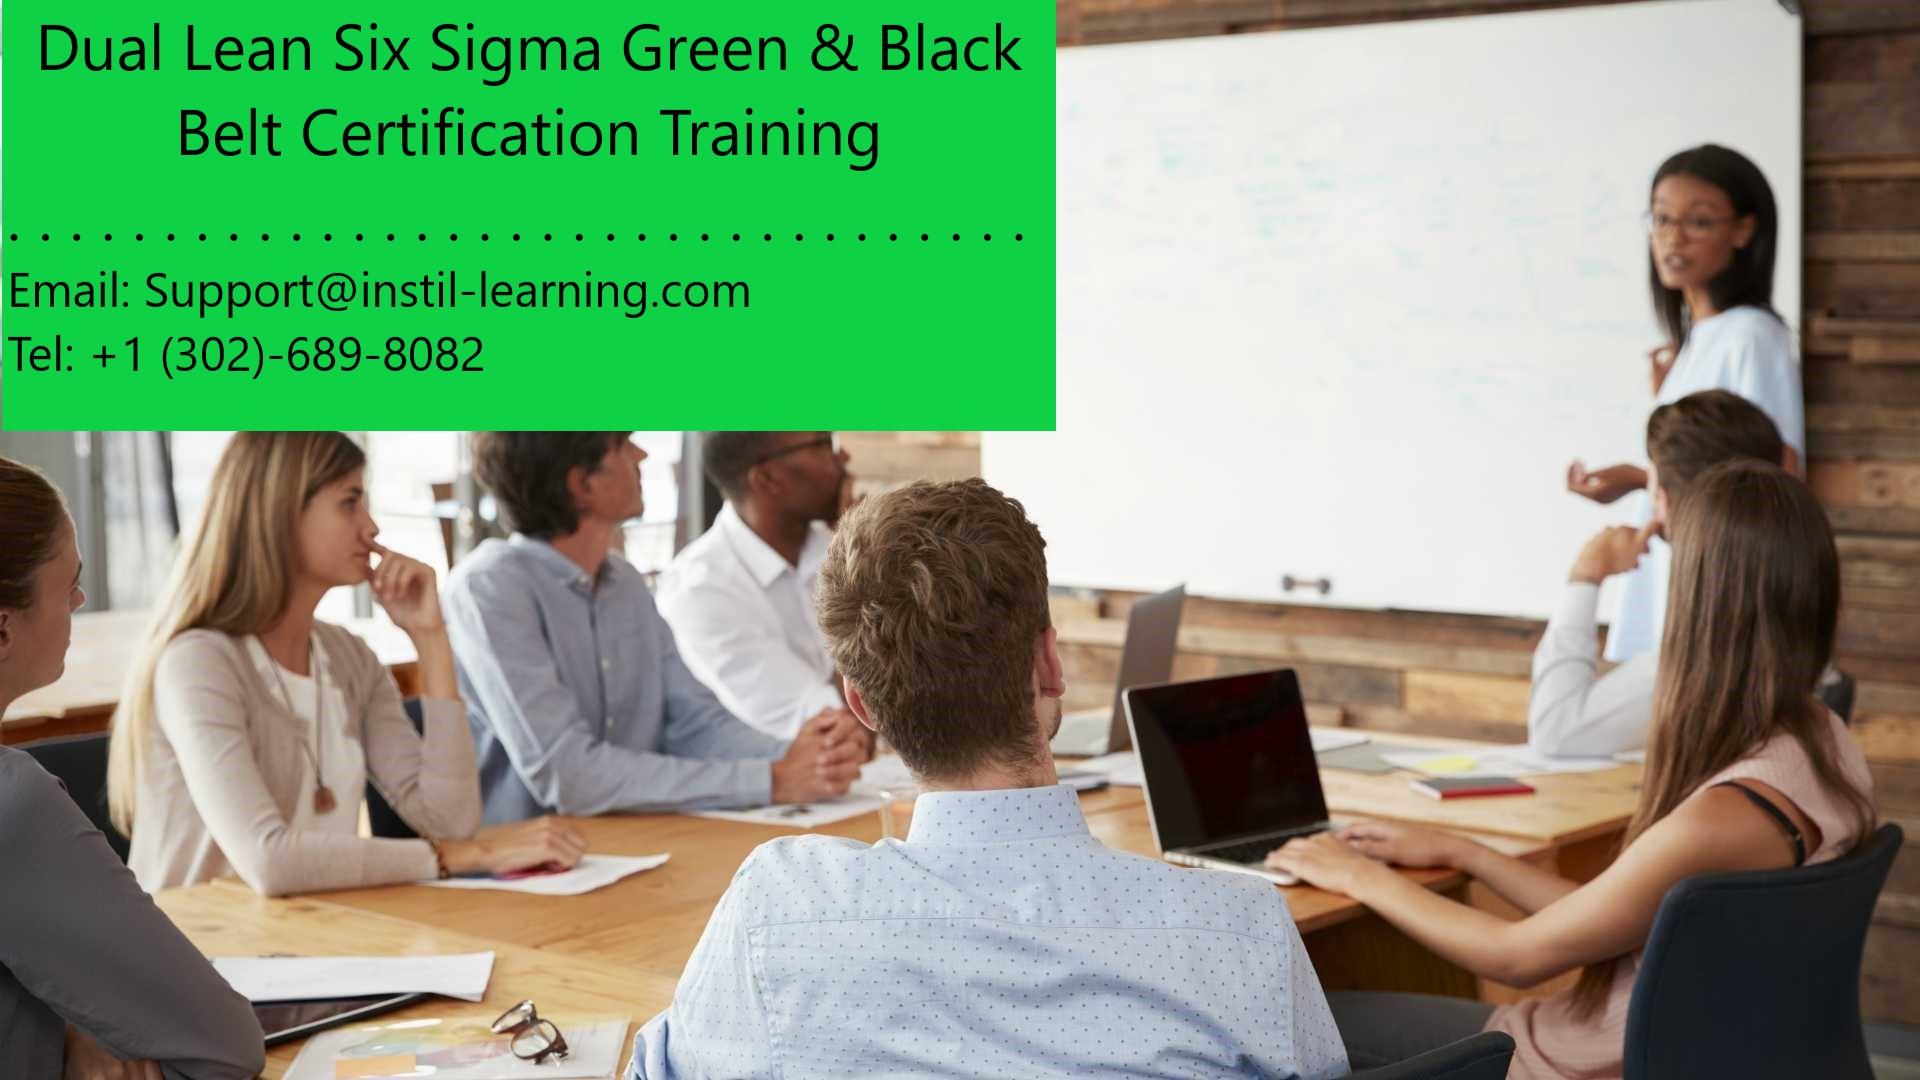 Dual Lean Six Sigma Green & Black Belt Training in Washington, DC